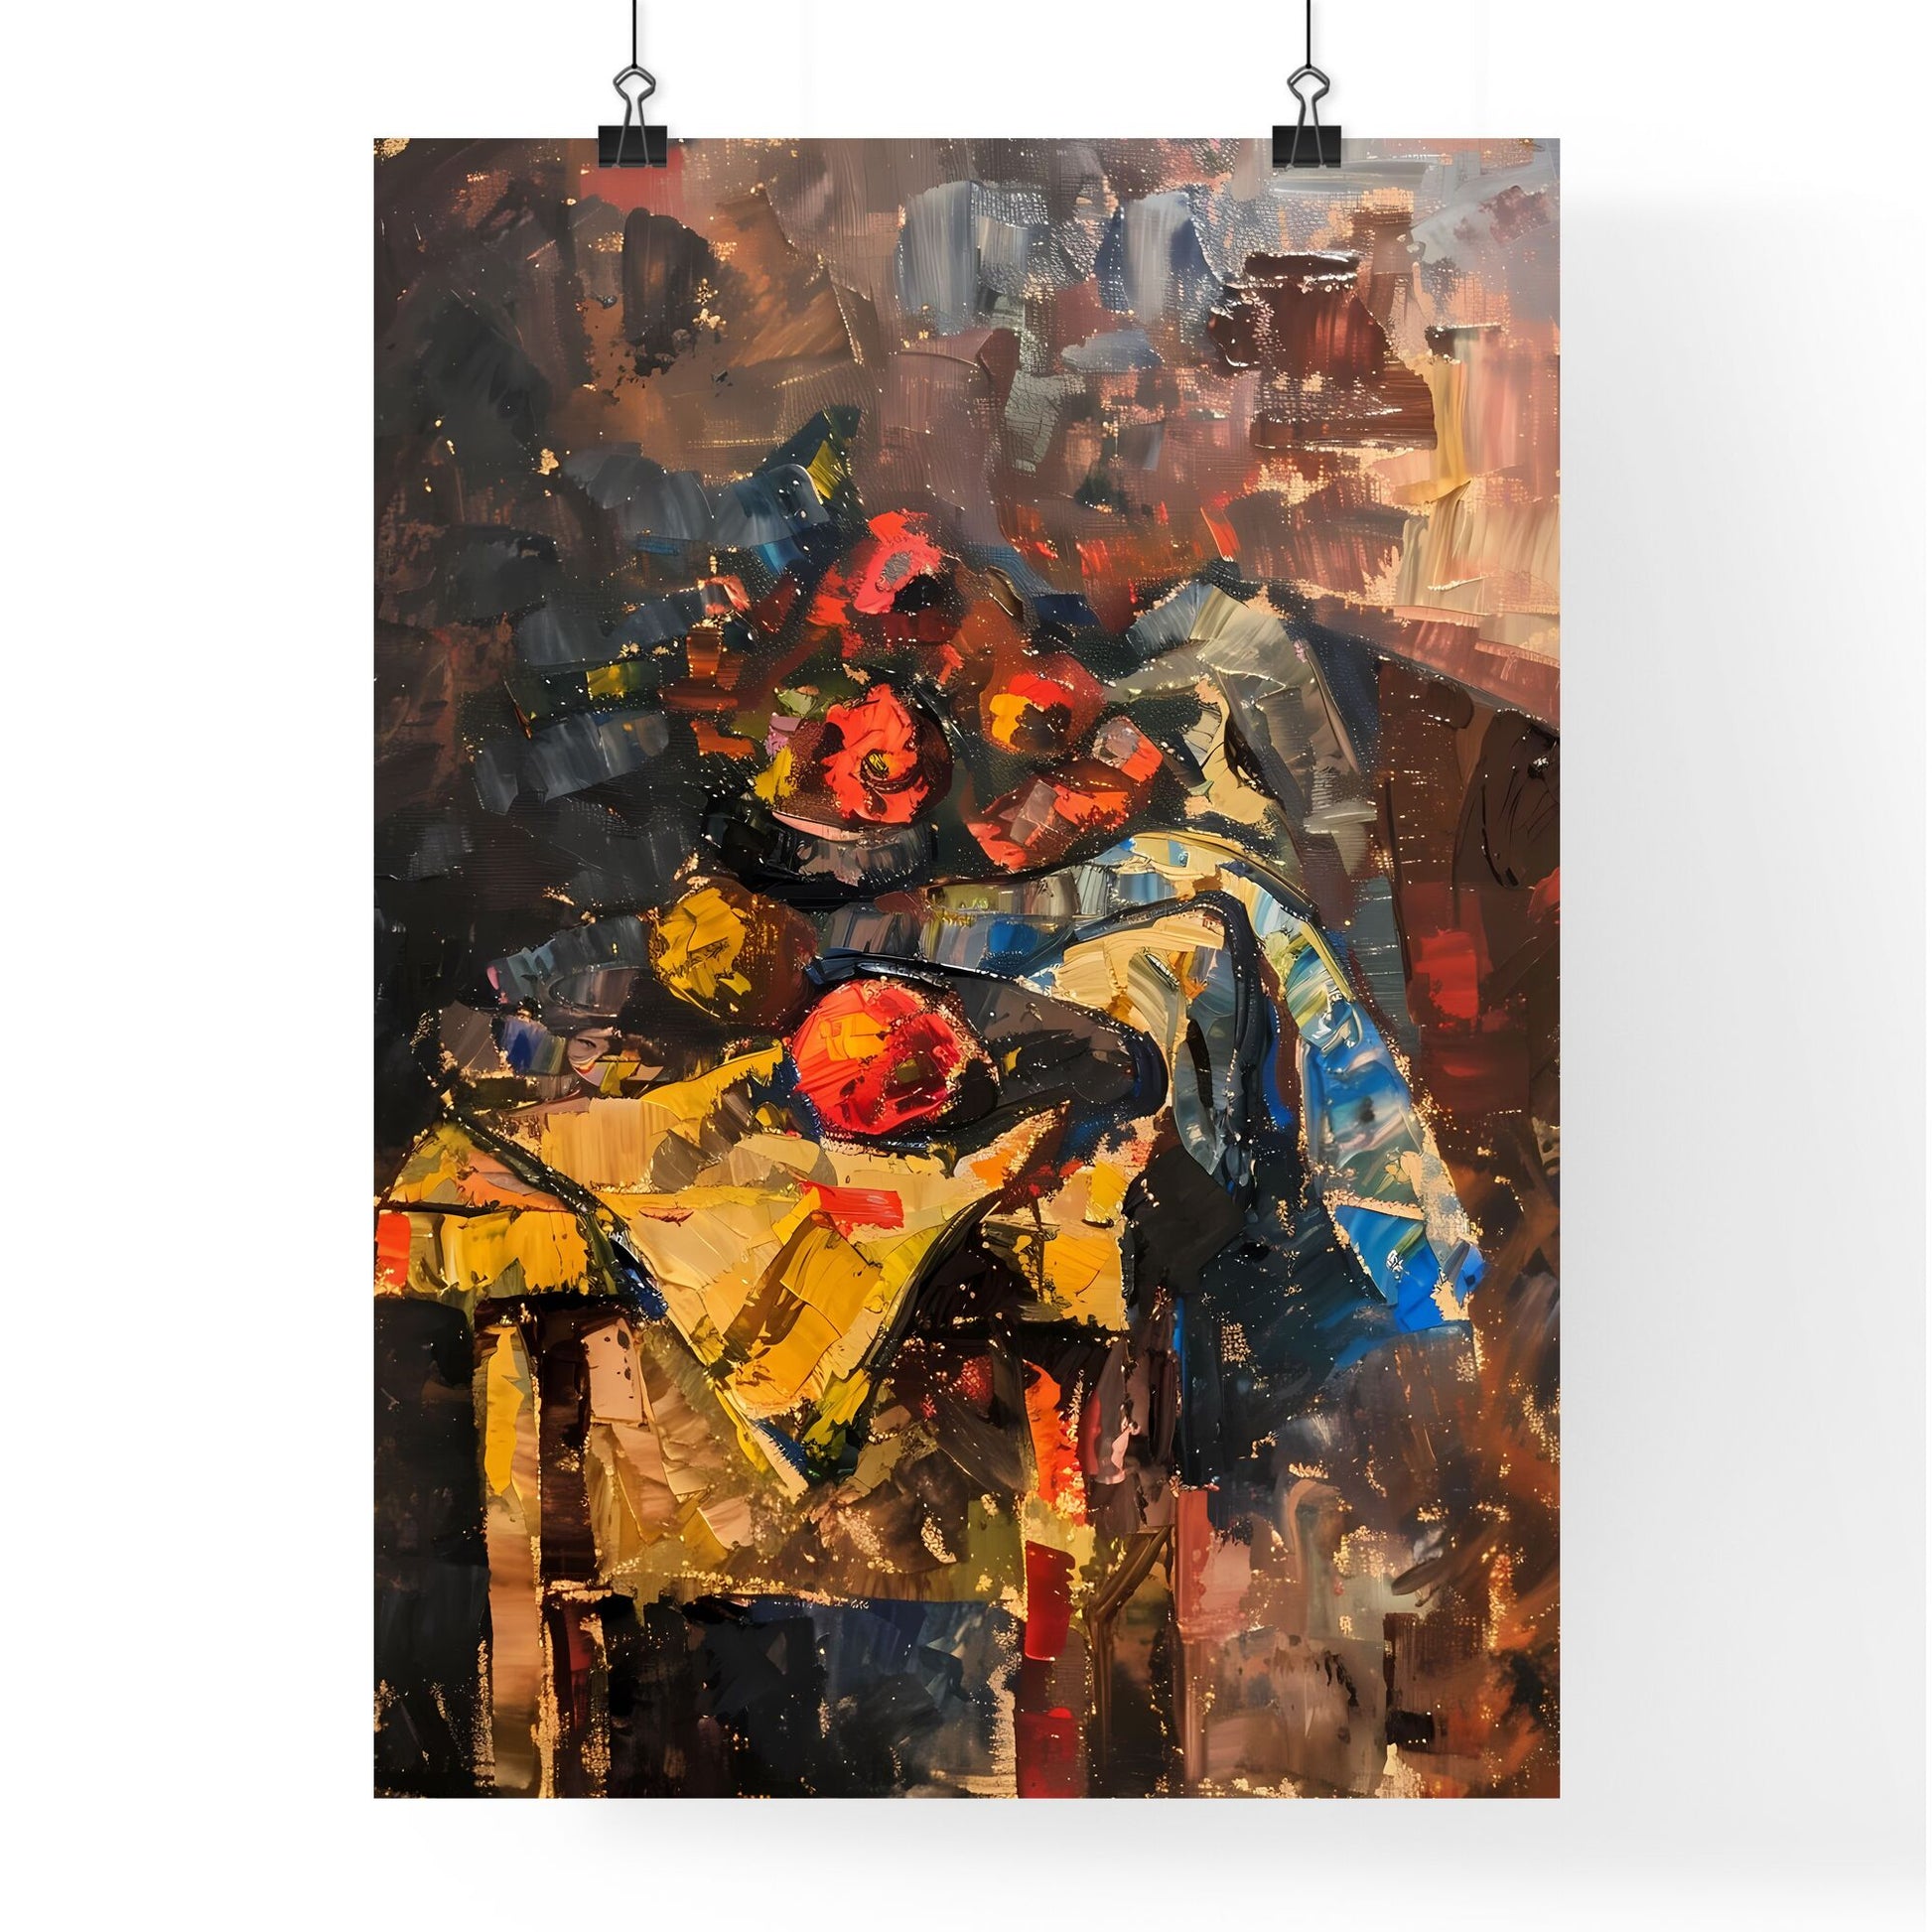 Impressionist Oil Painting | Still Life | Fruit | Table | Moody | Artistic | Vibrant | Loose Brushstrokes Default Title